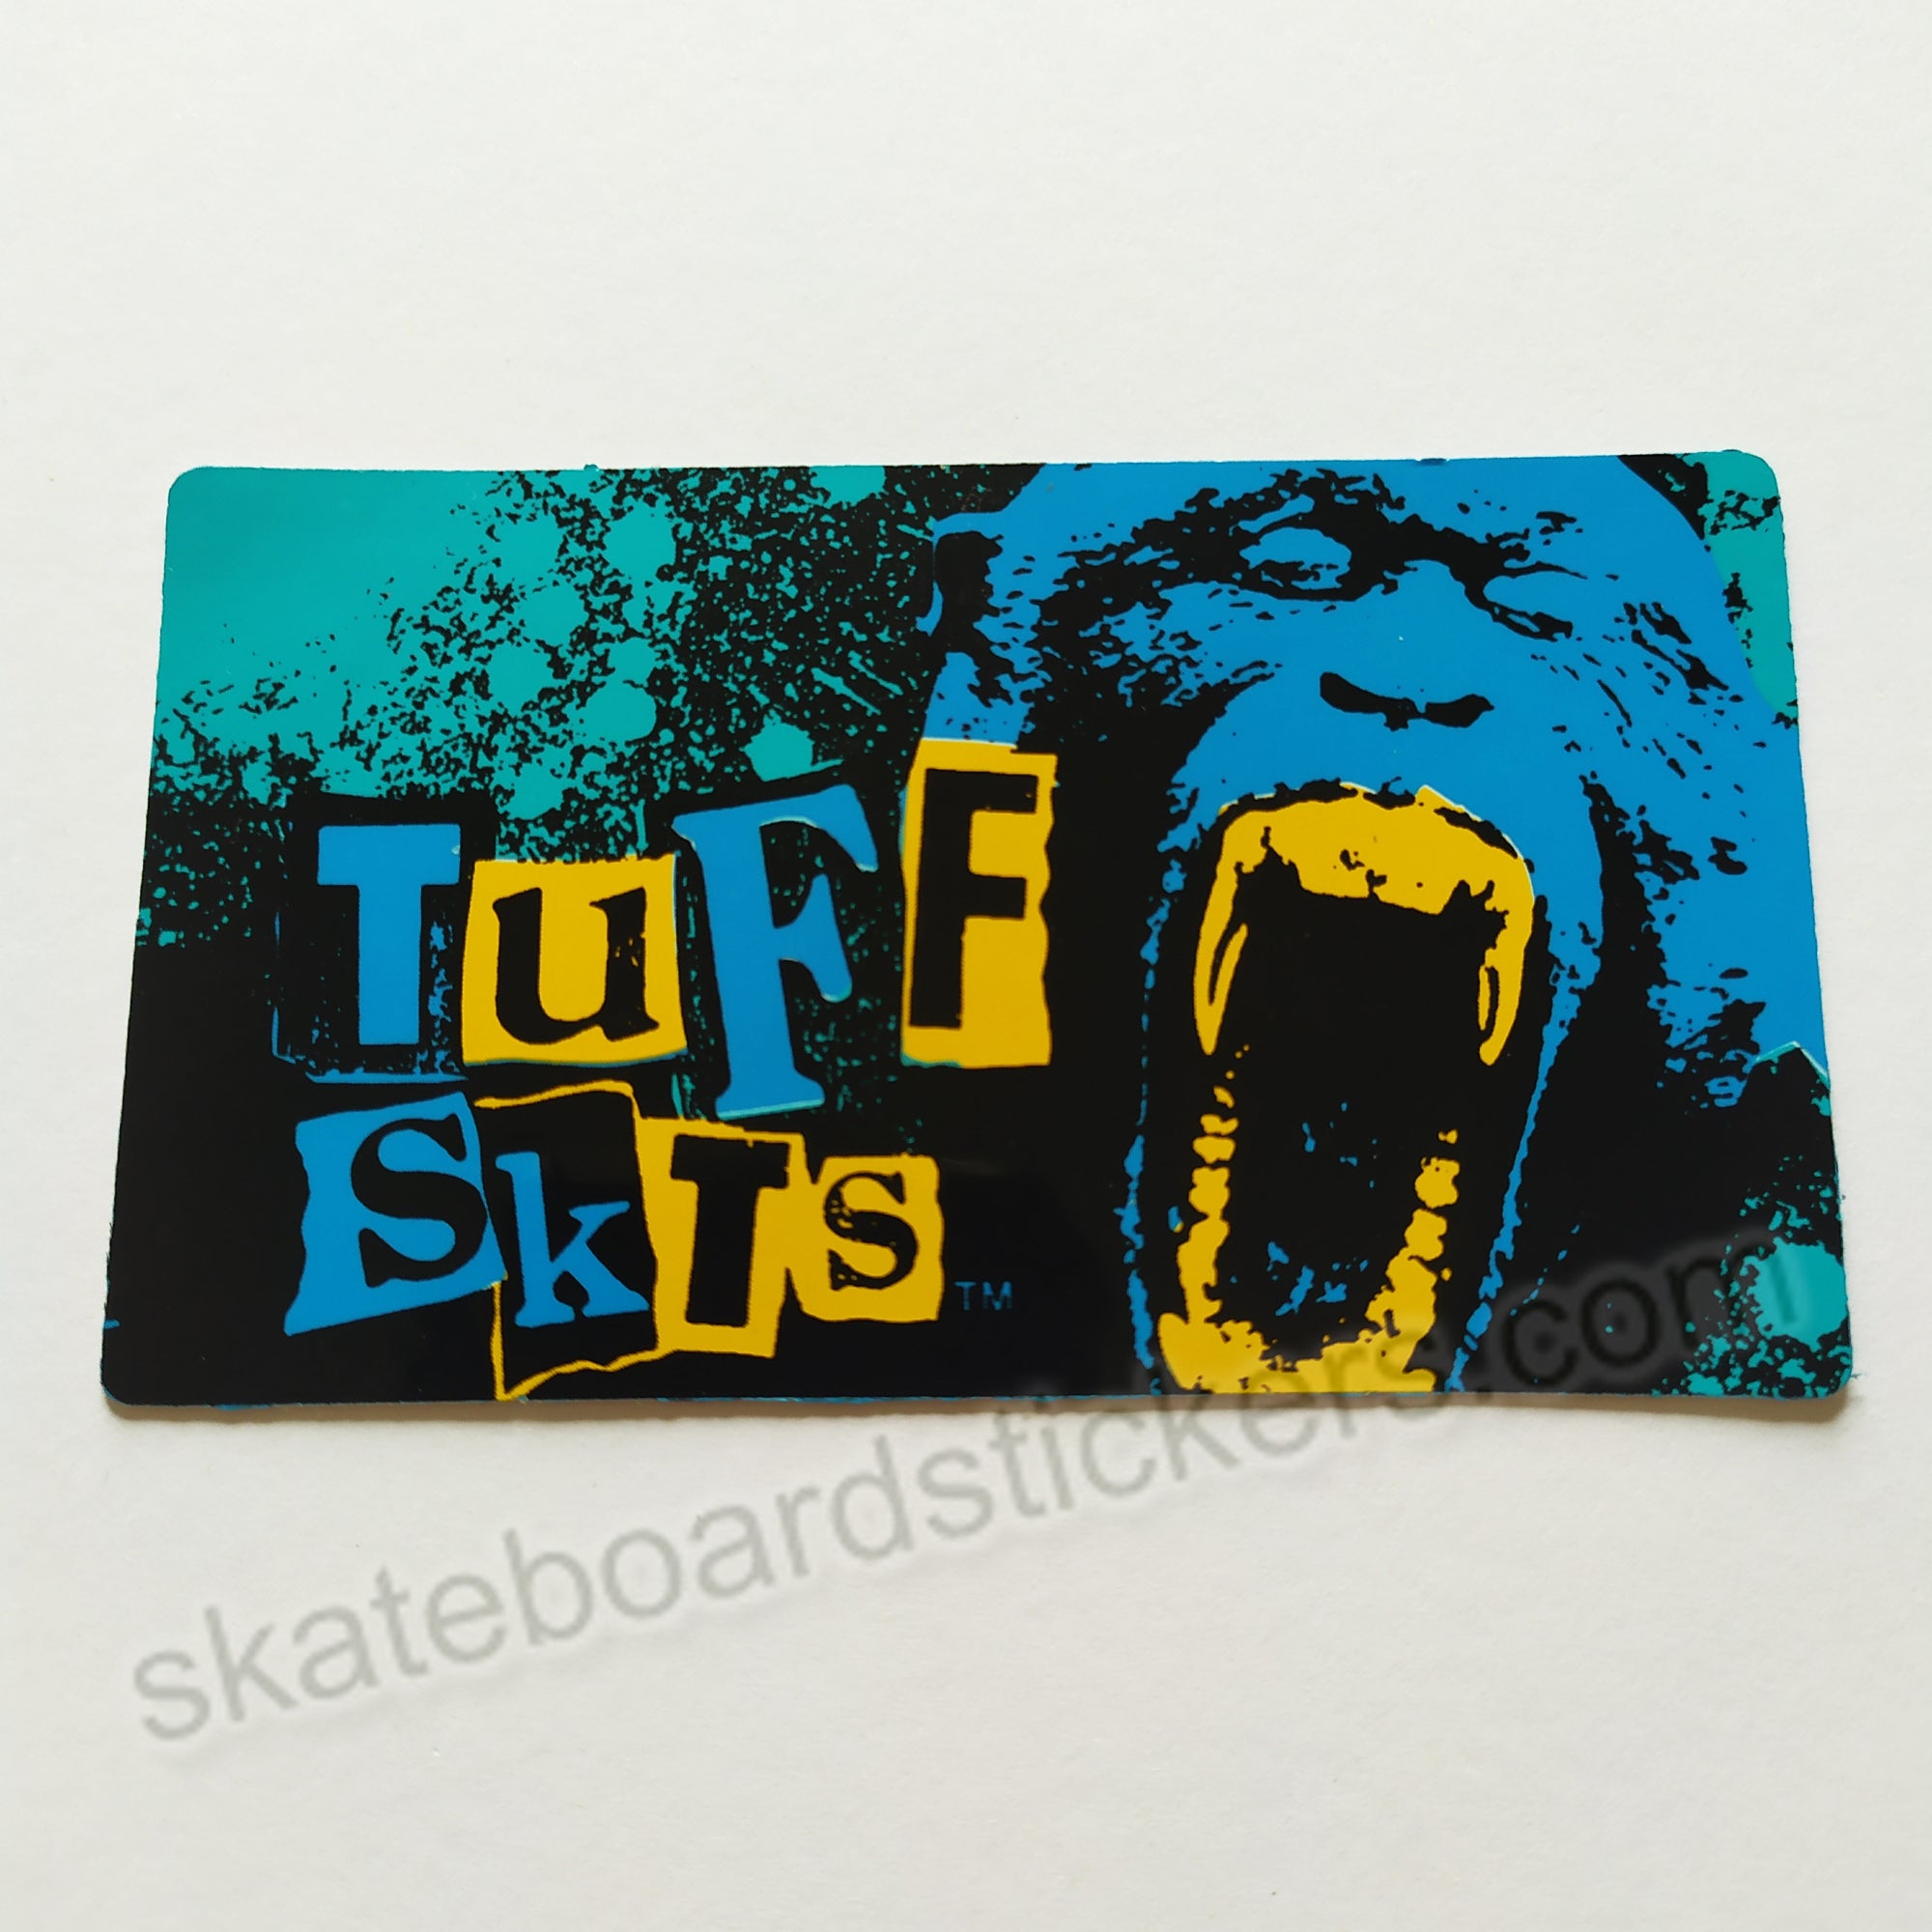 TUFF SKTS Old School Skateboard Sticker